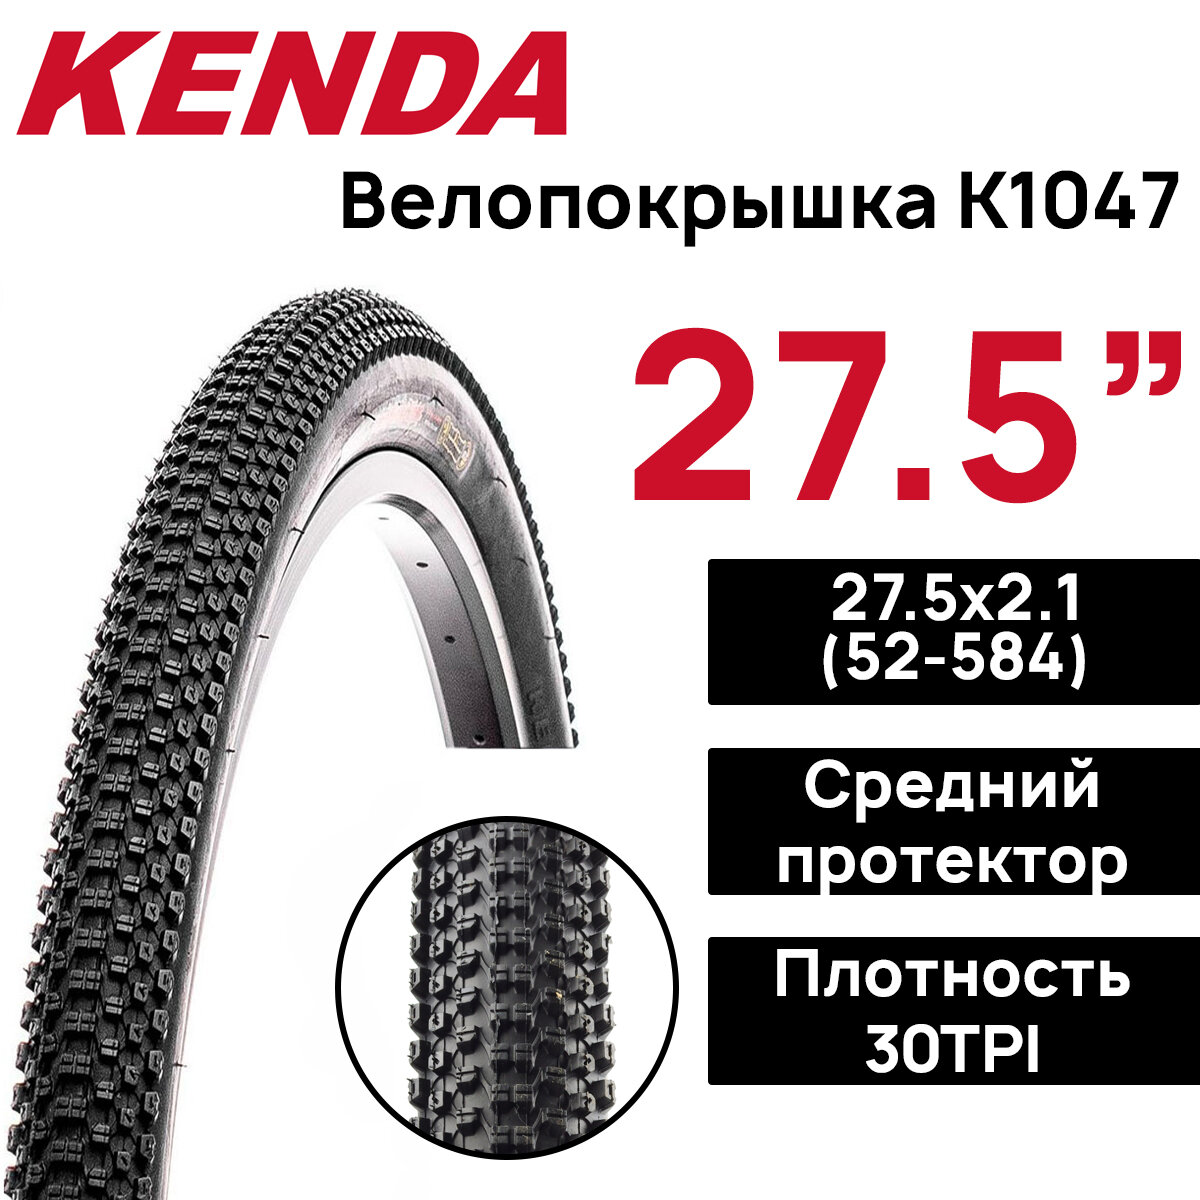 Покрышка для велосипеда Kenda Premium K1047 Small Block Eight 27.5x2.1 (52-584) 30 TPI, черная